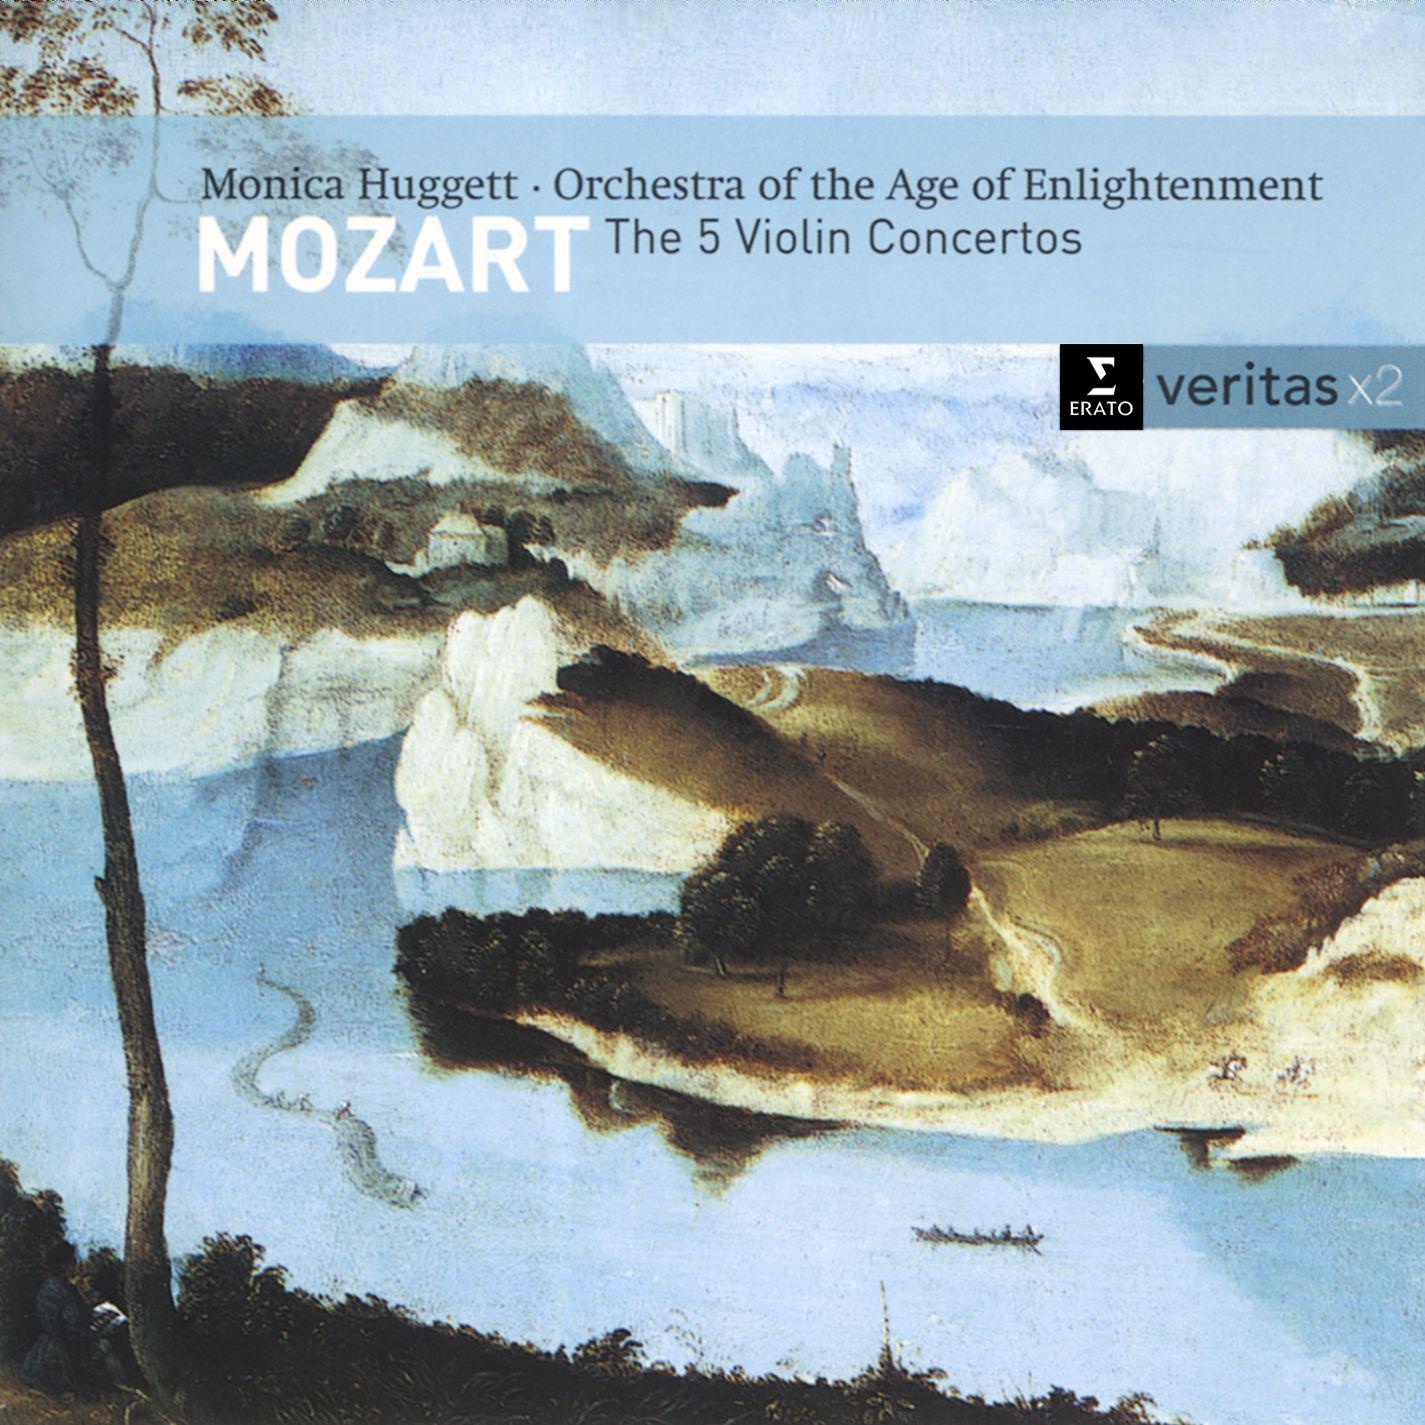 Violin Concerto No. 1 in B flat major K207: I. Allegro moderato